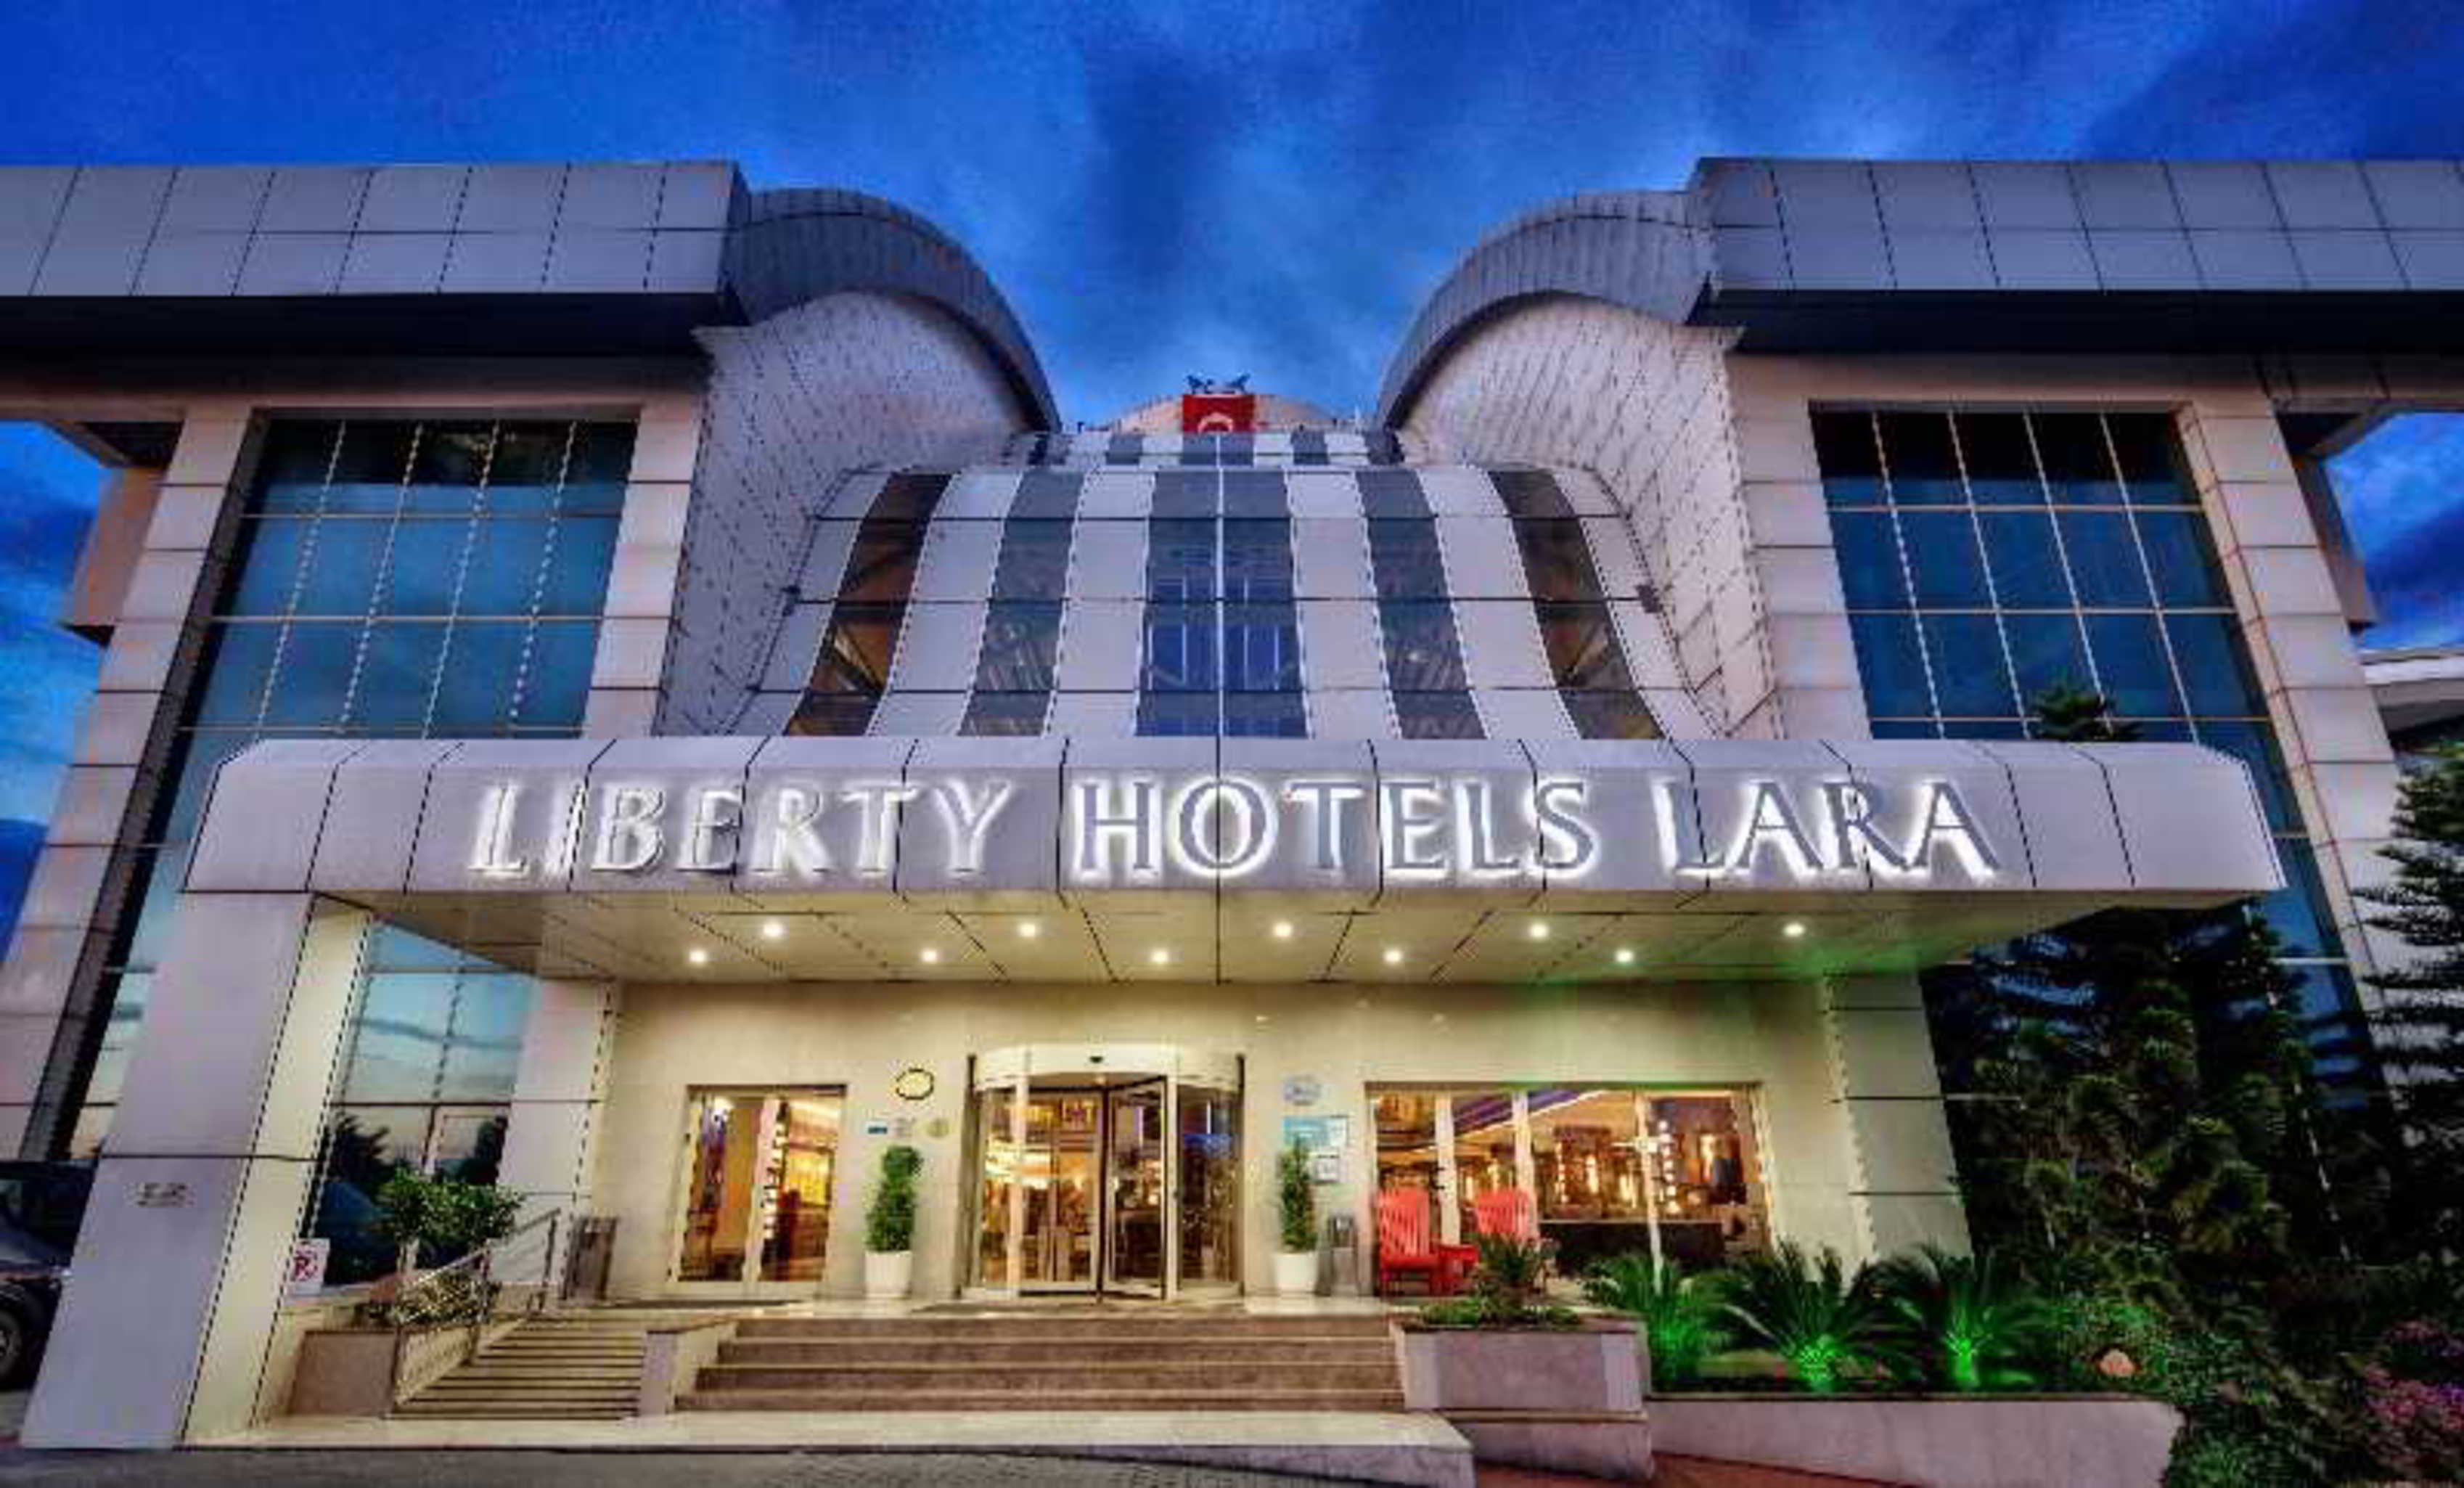 Liberty Hotels Lara